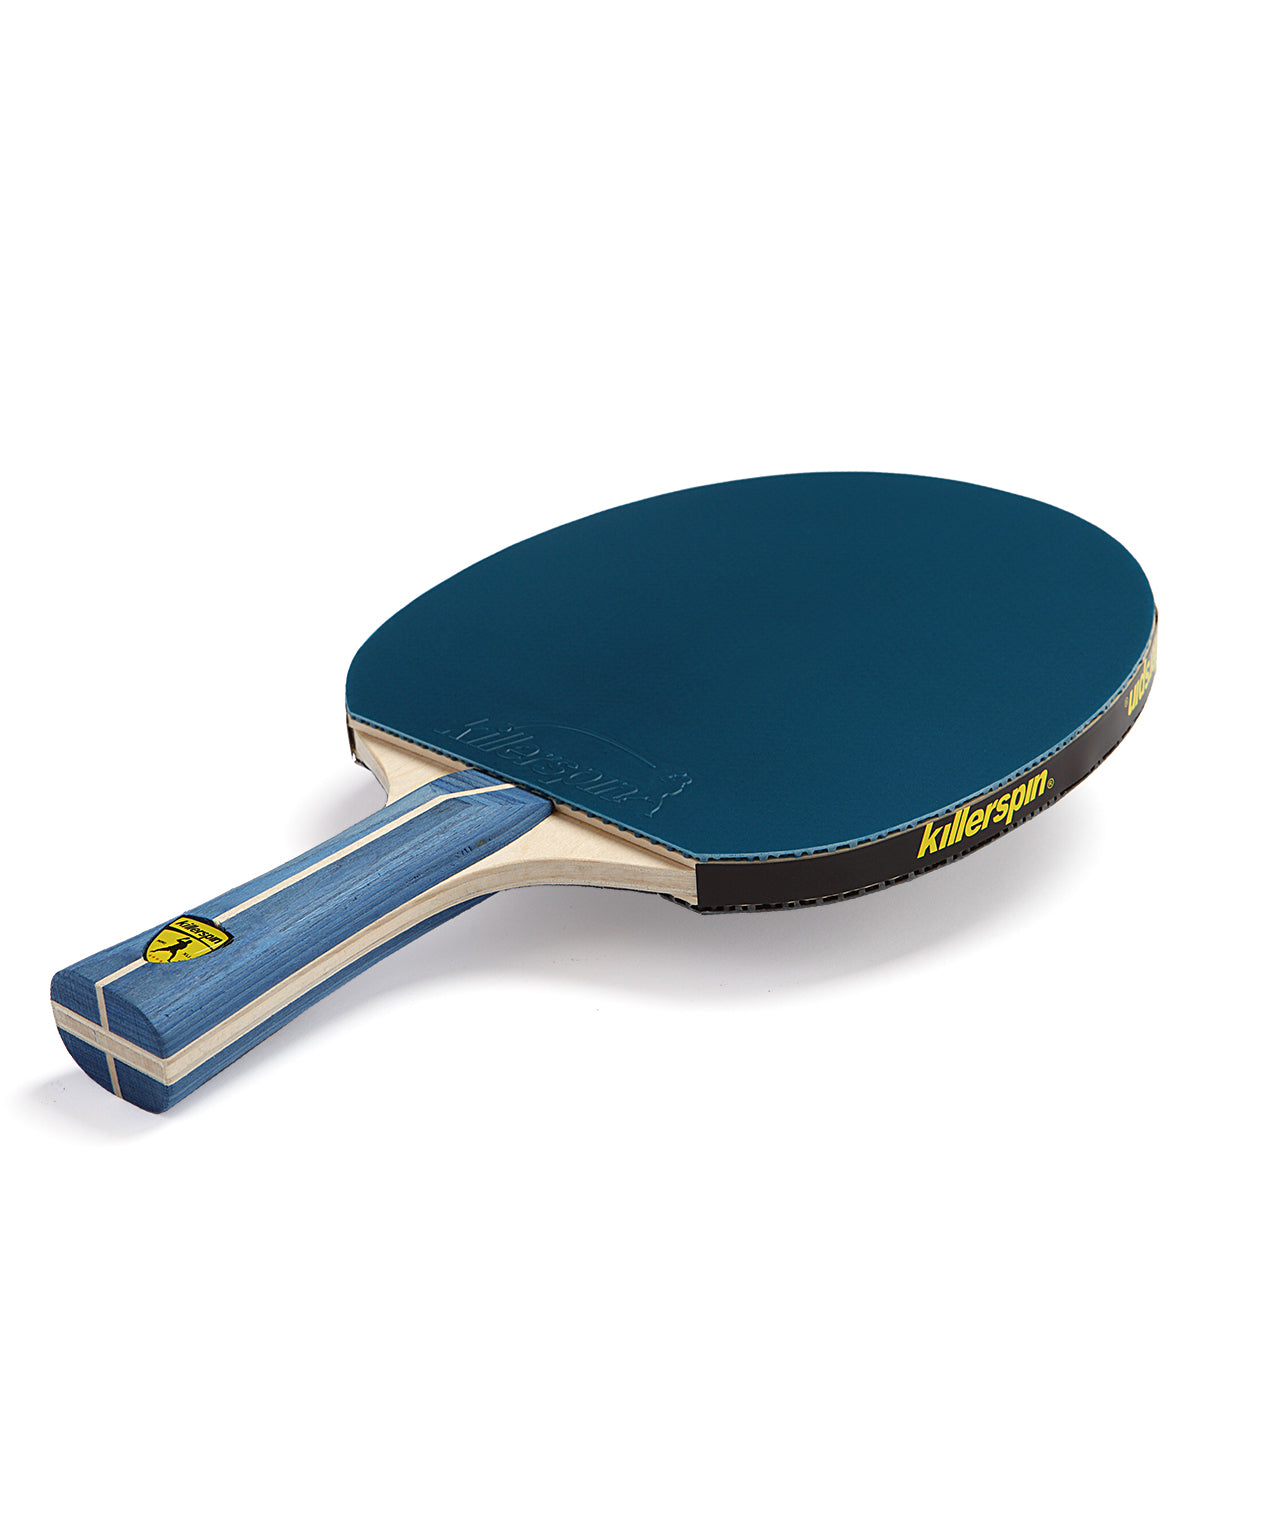 Killerspin Ping Pong Paddle Jet200 BluVannila - Blue Rubber